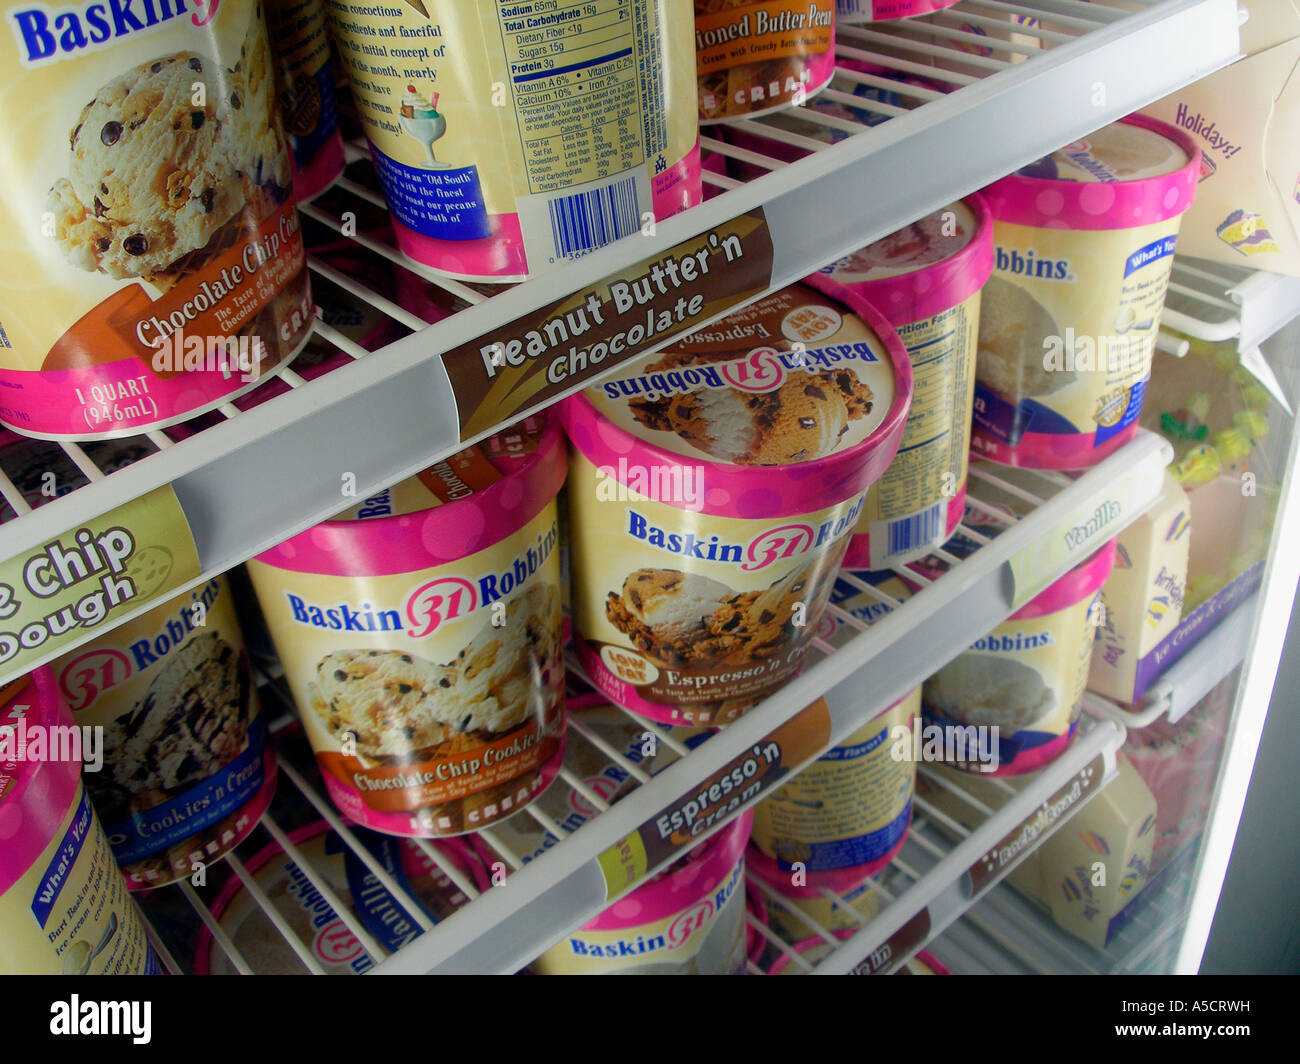 Baskin Robbins ice cream in a freezer case Stock Photo